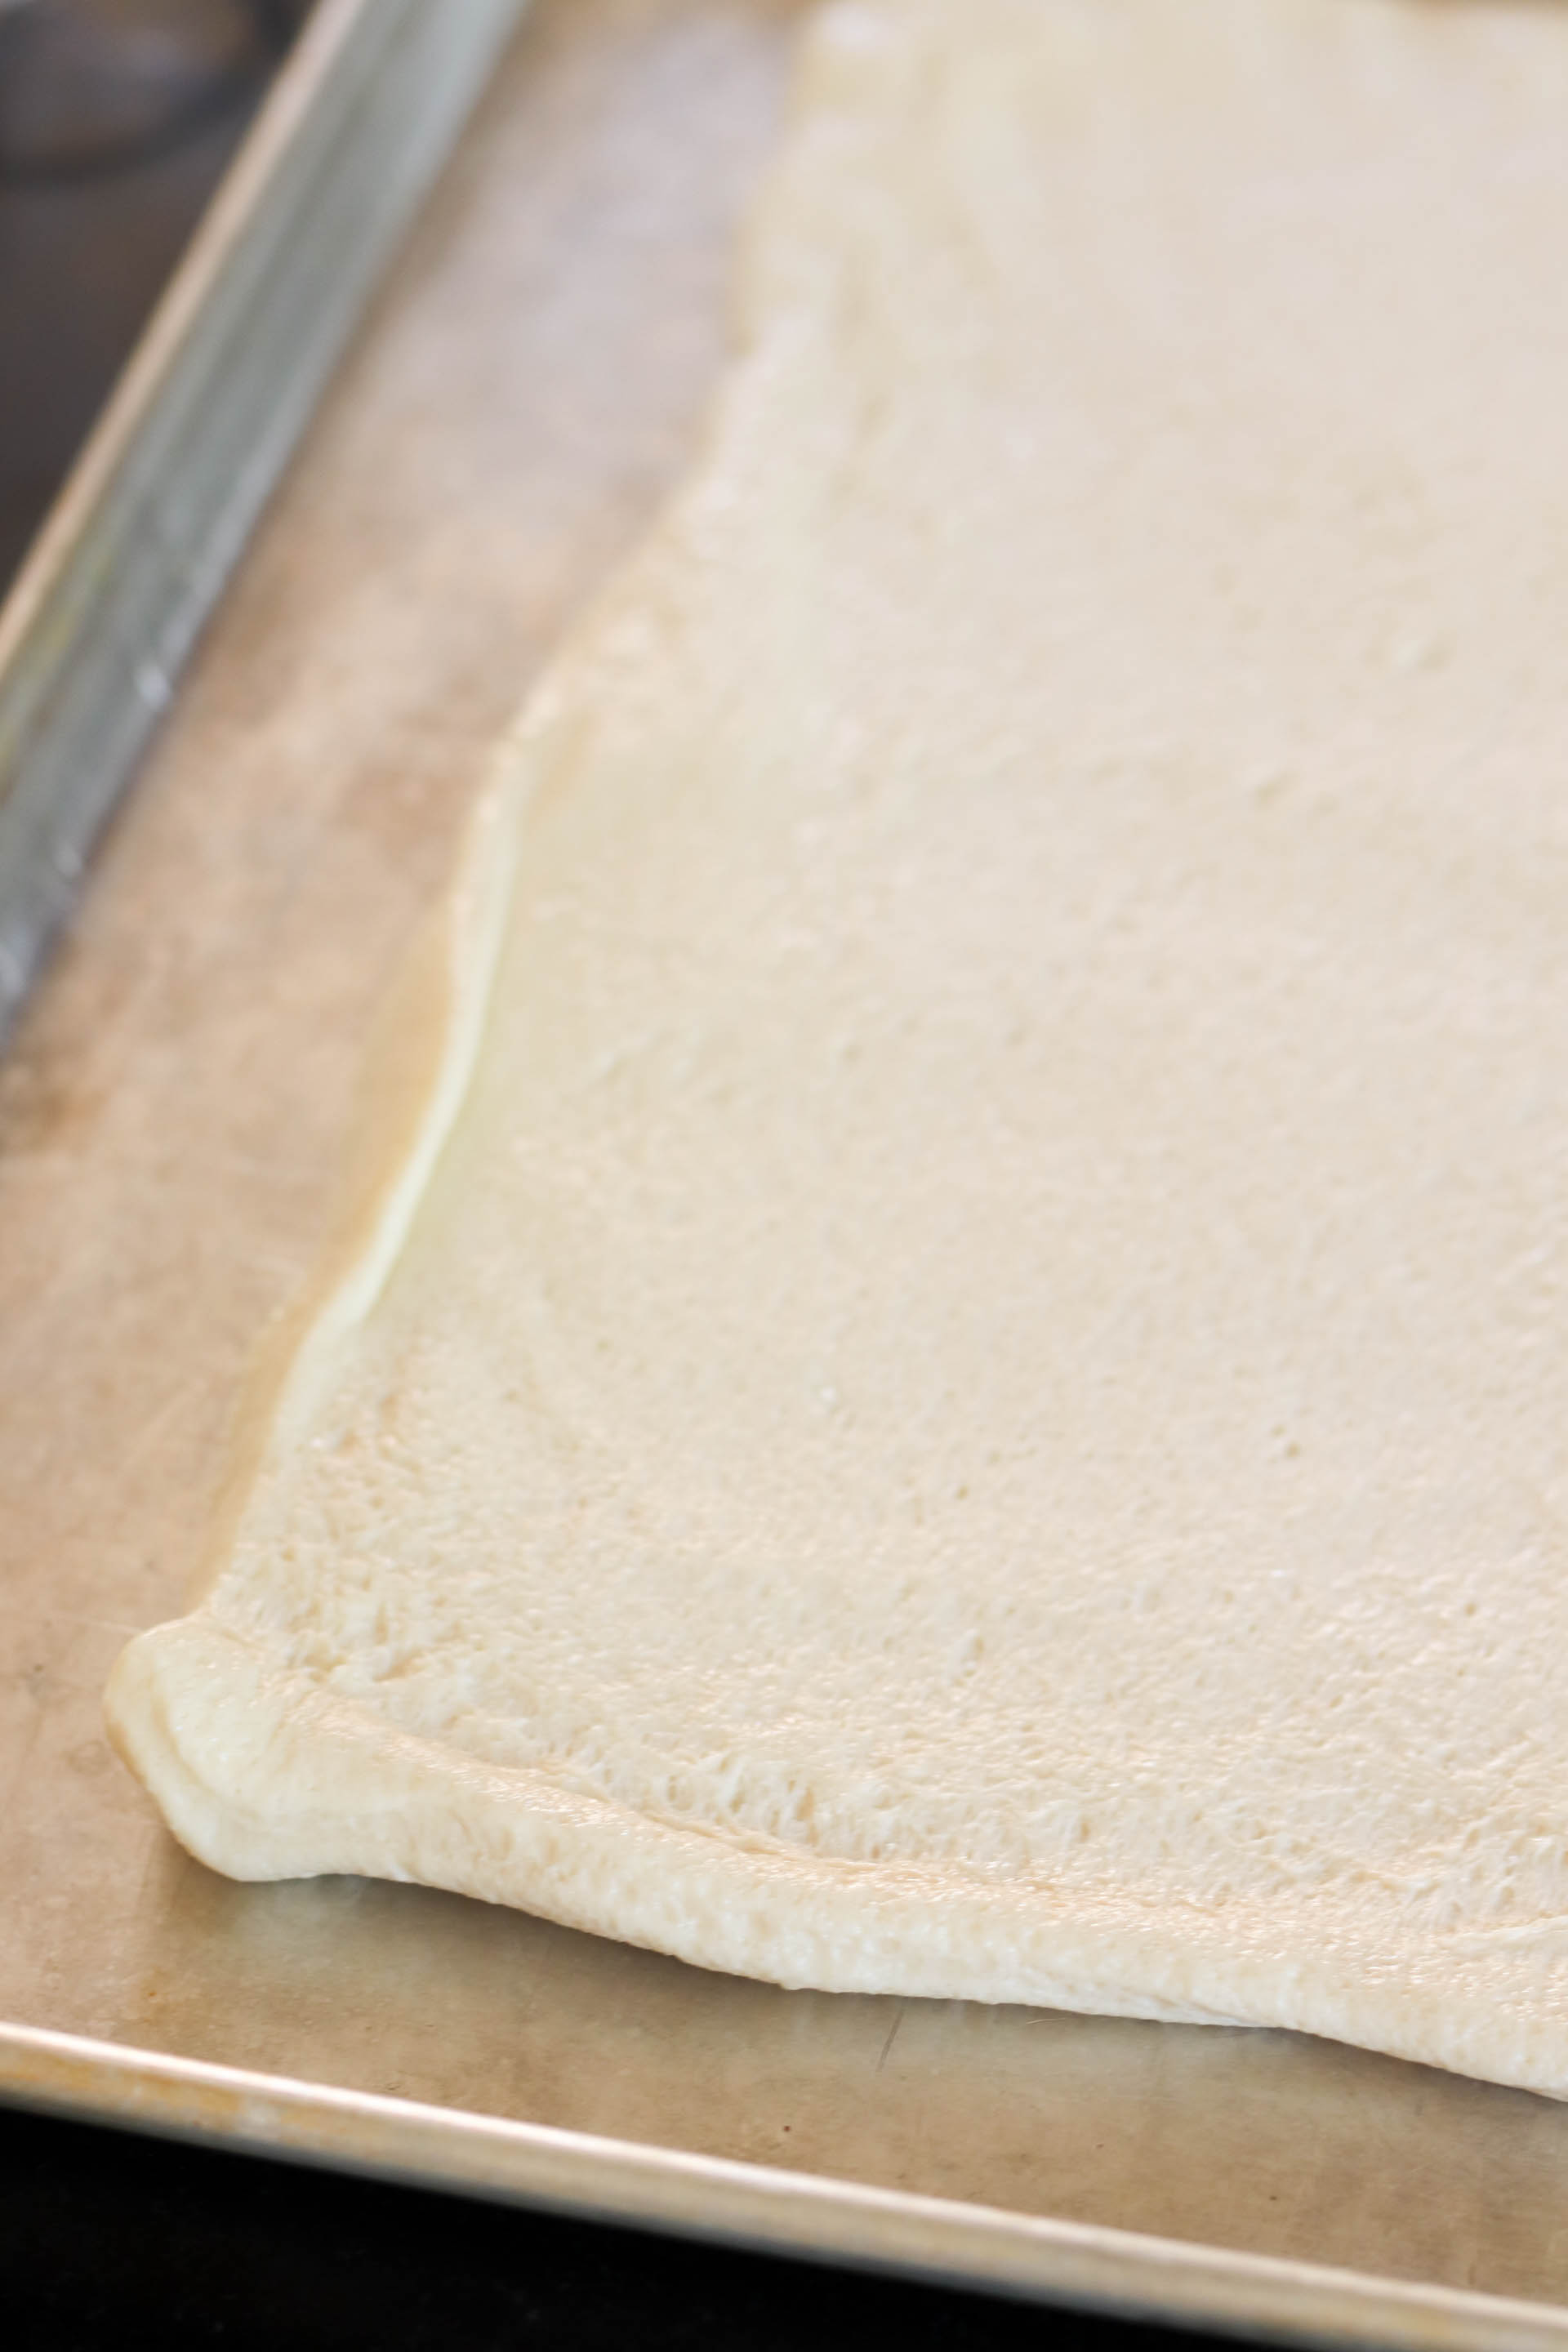 Pizza dough on sheet pan